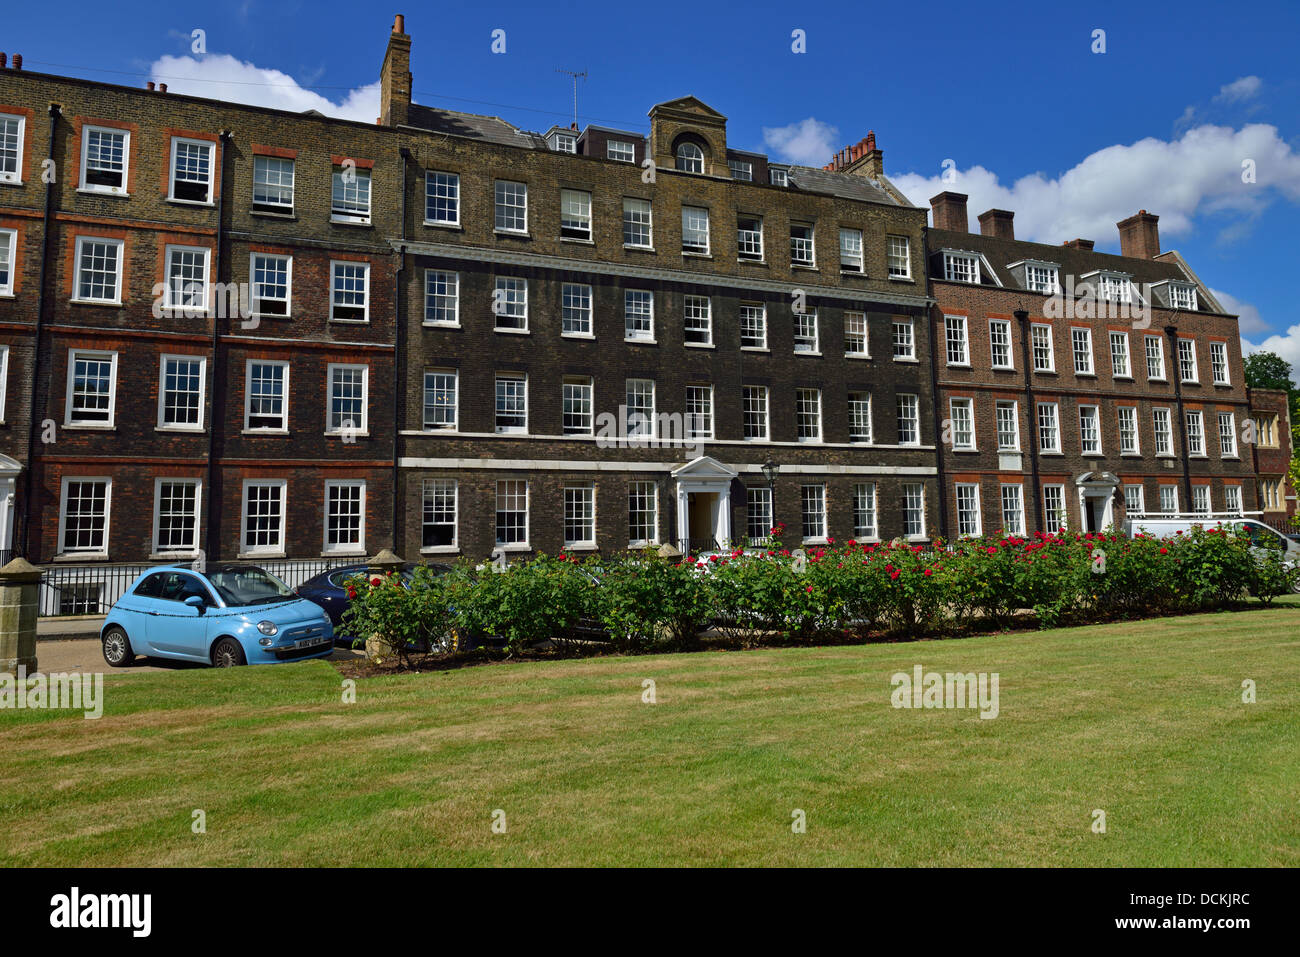 New Square, Lincoln's Inn, Borough of Holborn, London WC2, United Kingdom Stock Photo